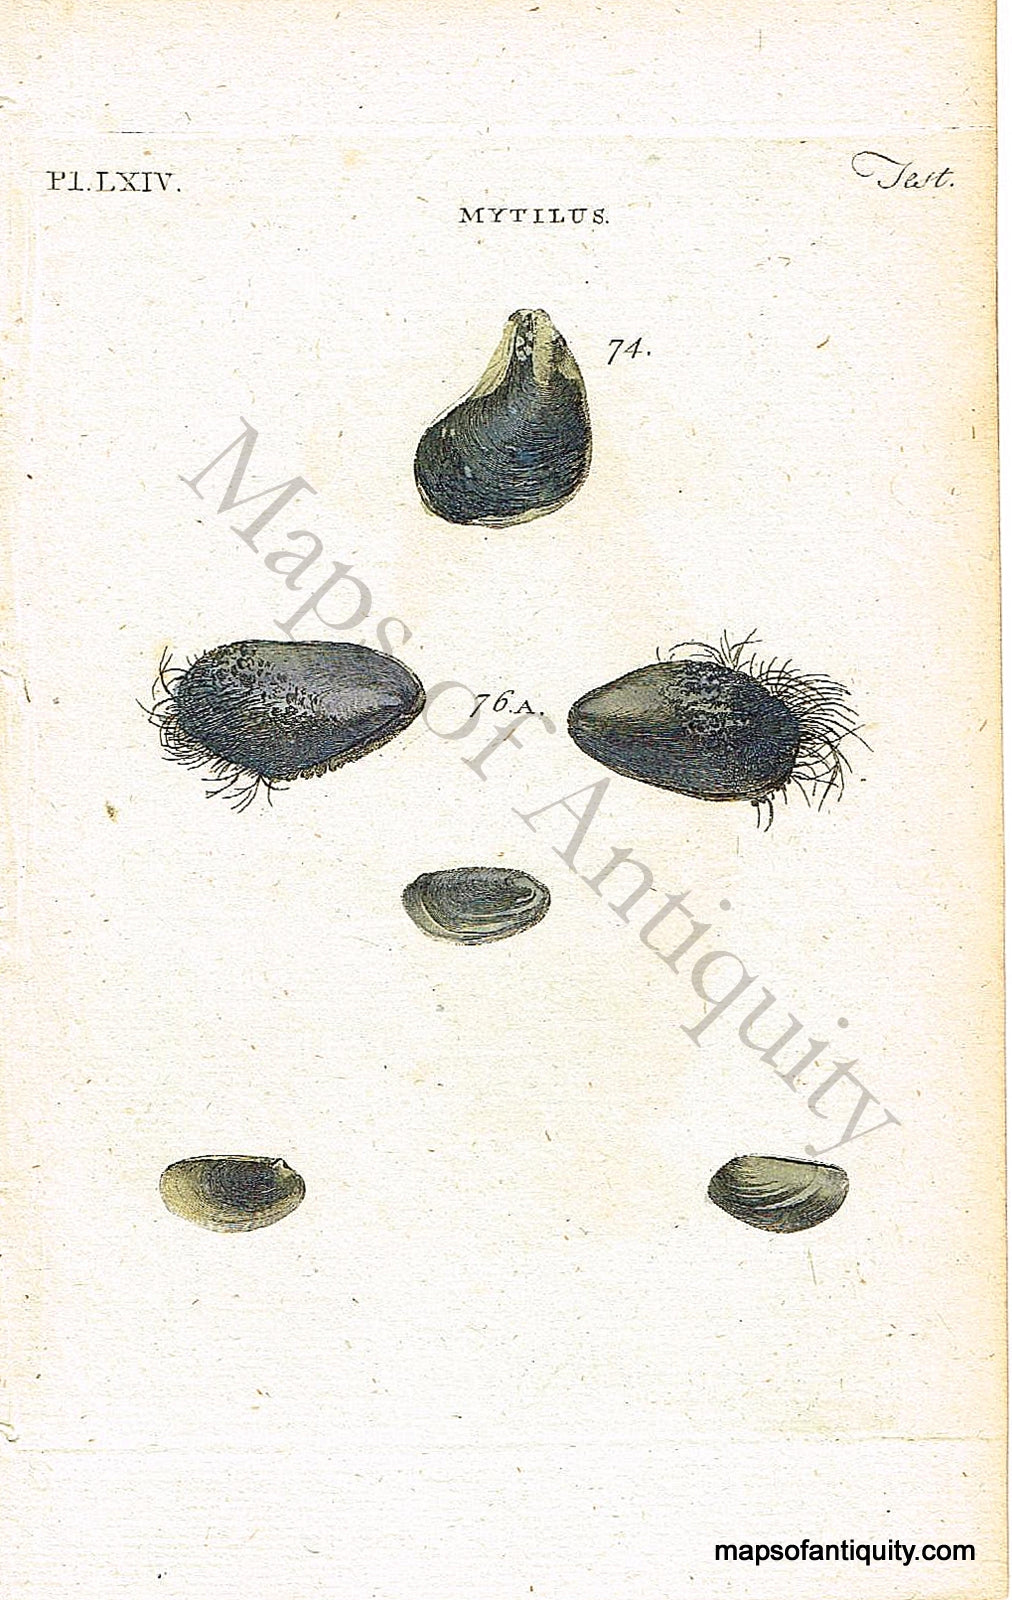 Antique-Hand-Colored-Engraved-Illustration-Mytilus-Shells-Natural-History-Prints-Shells-c.-1760--Maps-Of-Antiquity